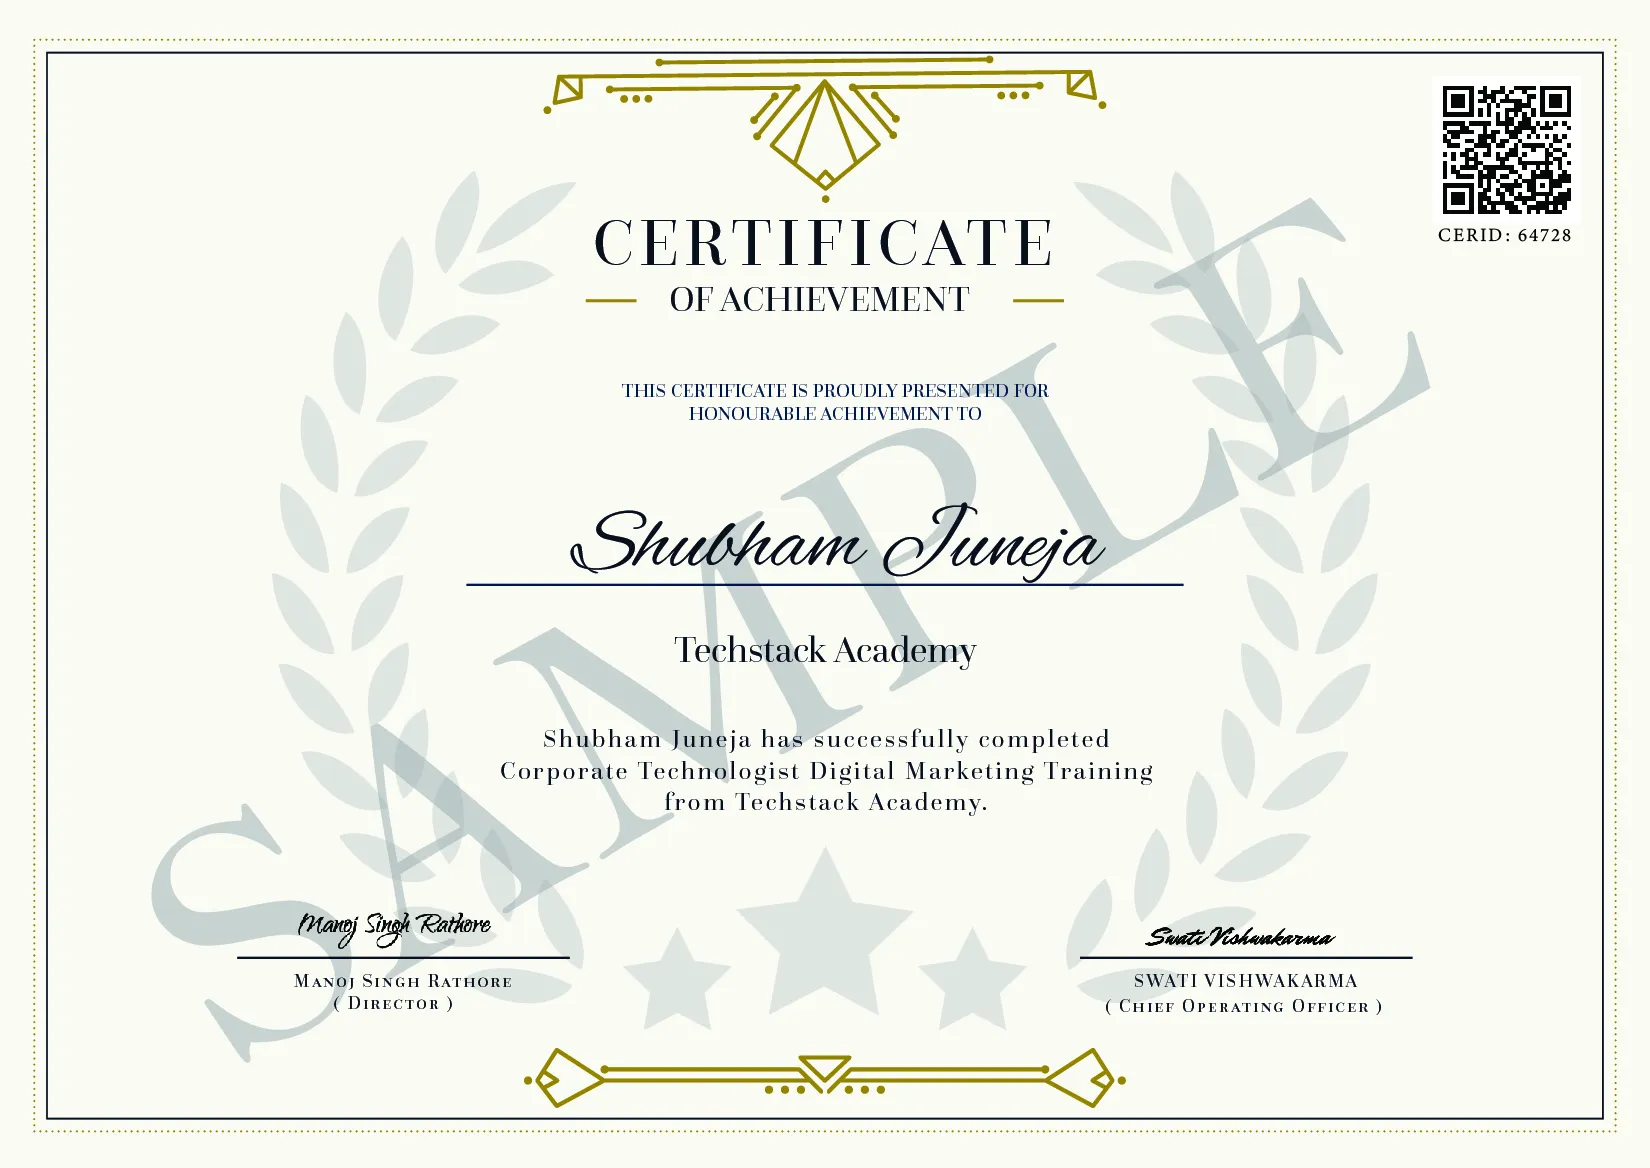 MBA in Digital Marketing Training Certificate